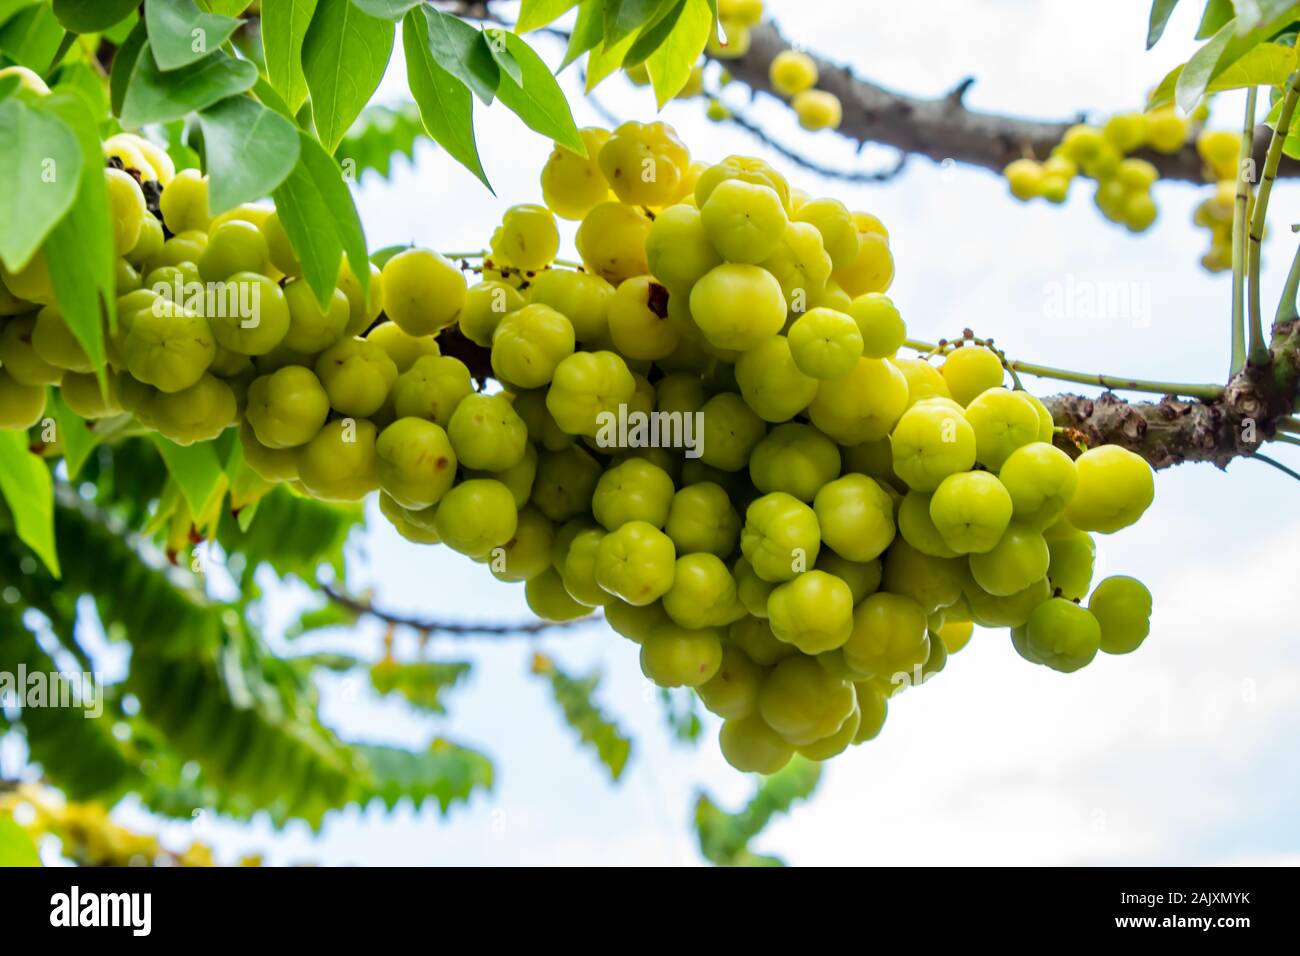 Gooseberry tree or Phyllanthus acidus (L.) Skeels. Stock Photo